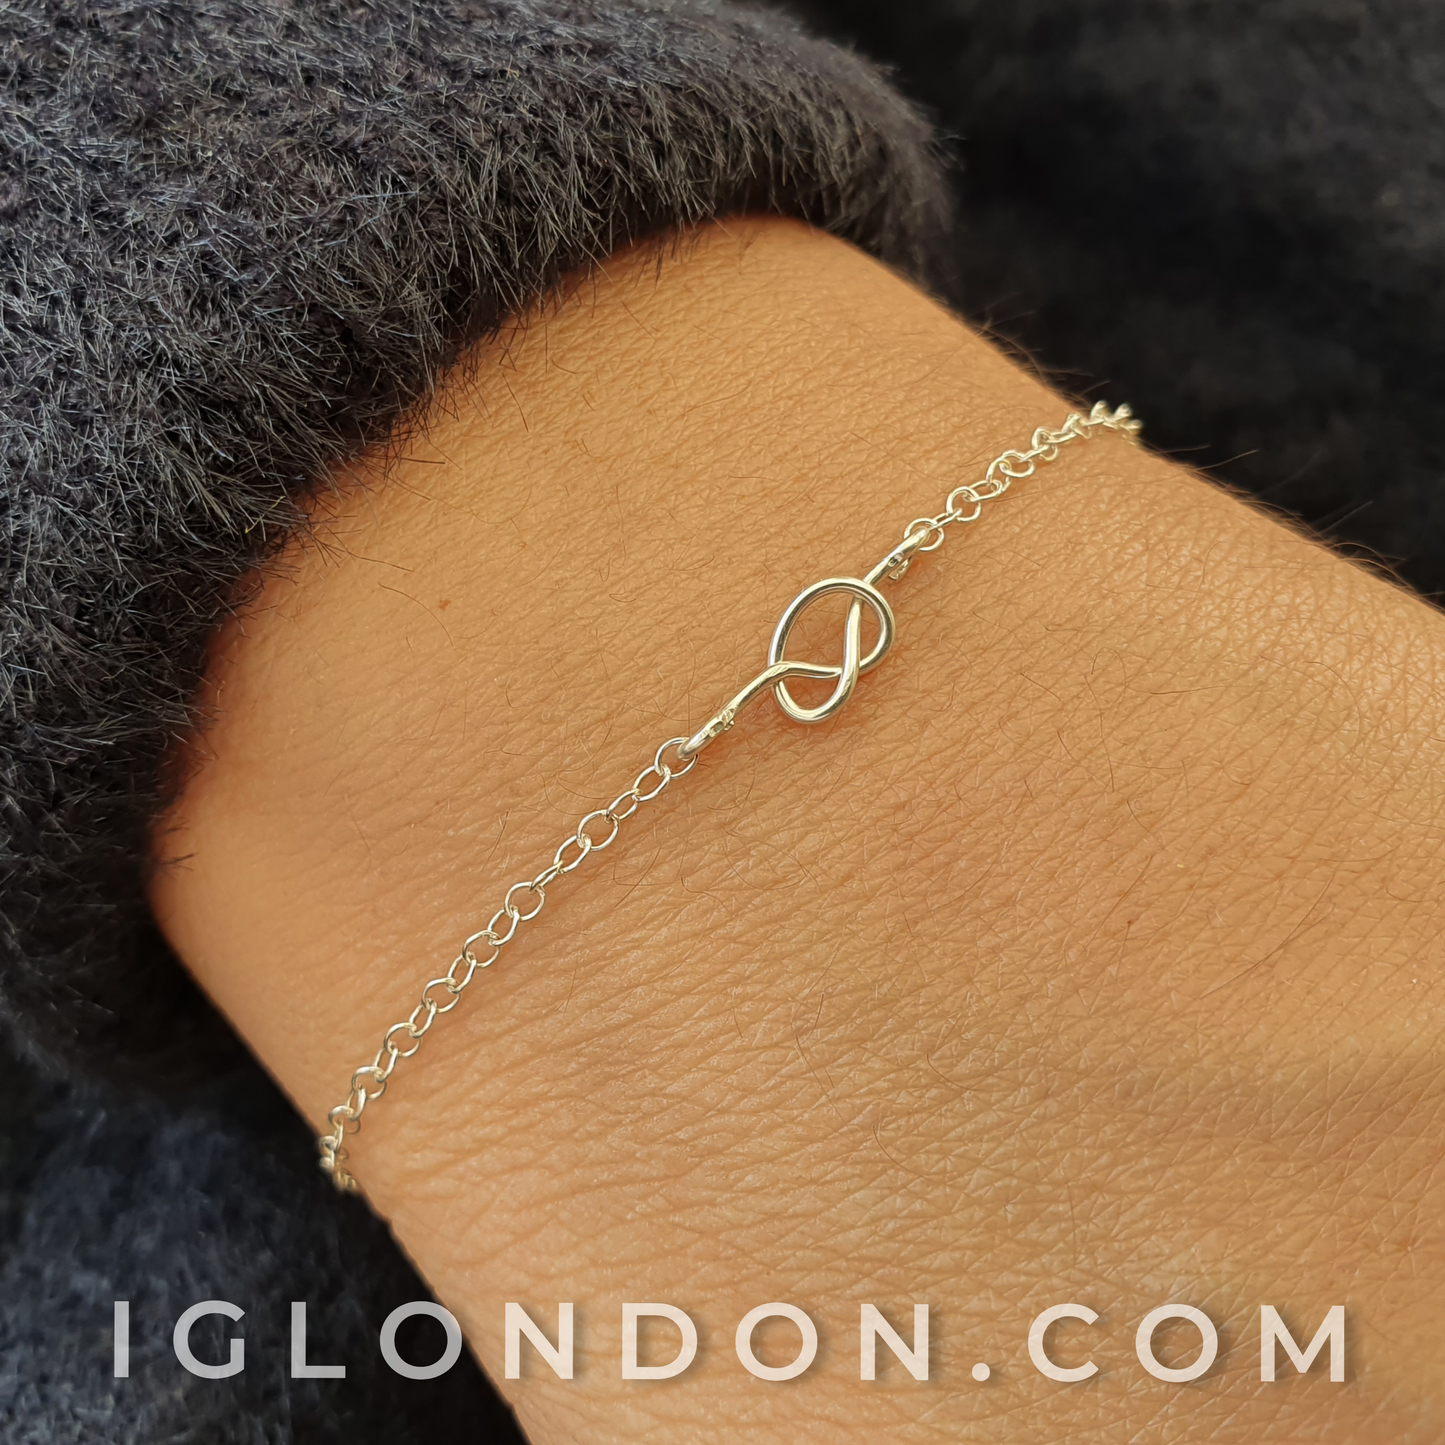 The knot friendship bracelet,The knot friendship bracelet, crafted in sterling silver - IGLondon.com IGLondon.com, knot, mother, mothers, new, sterling silver